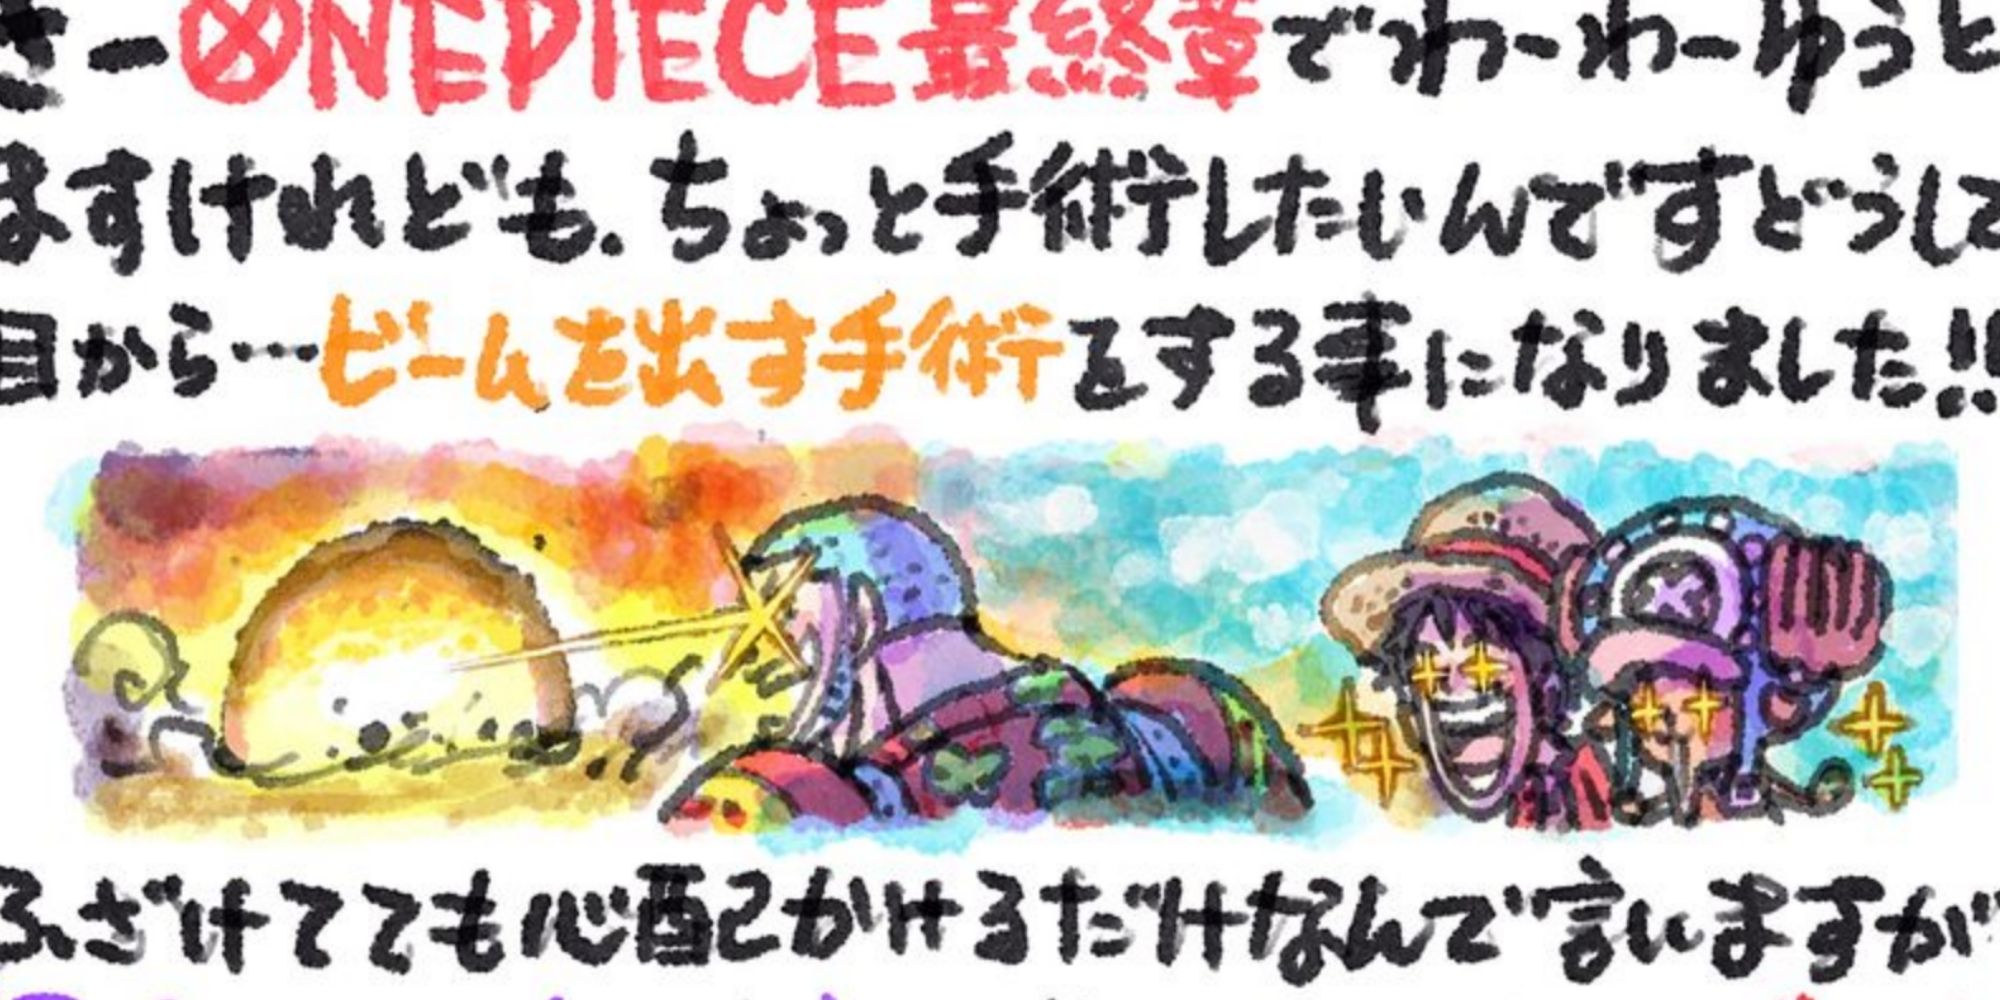 One Piece Manga To Go On Hiatus